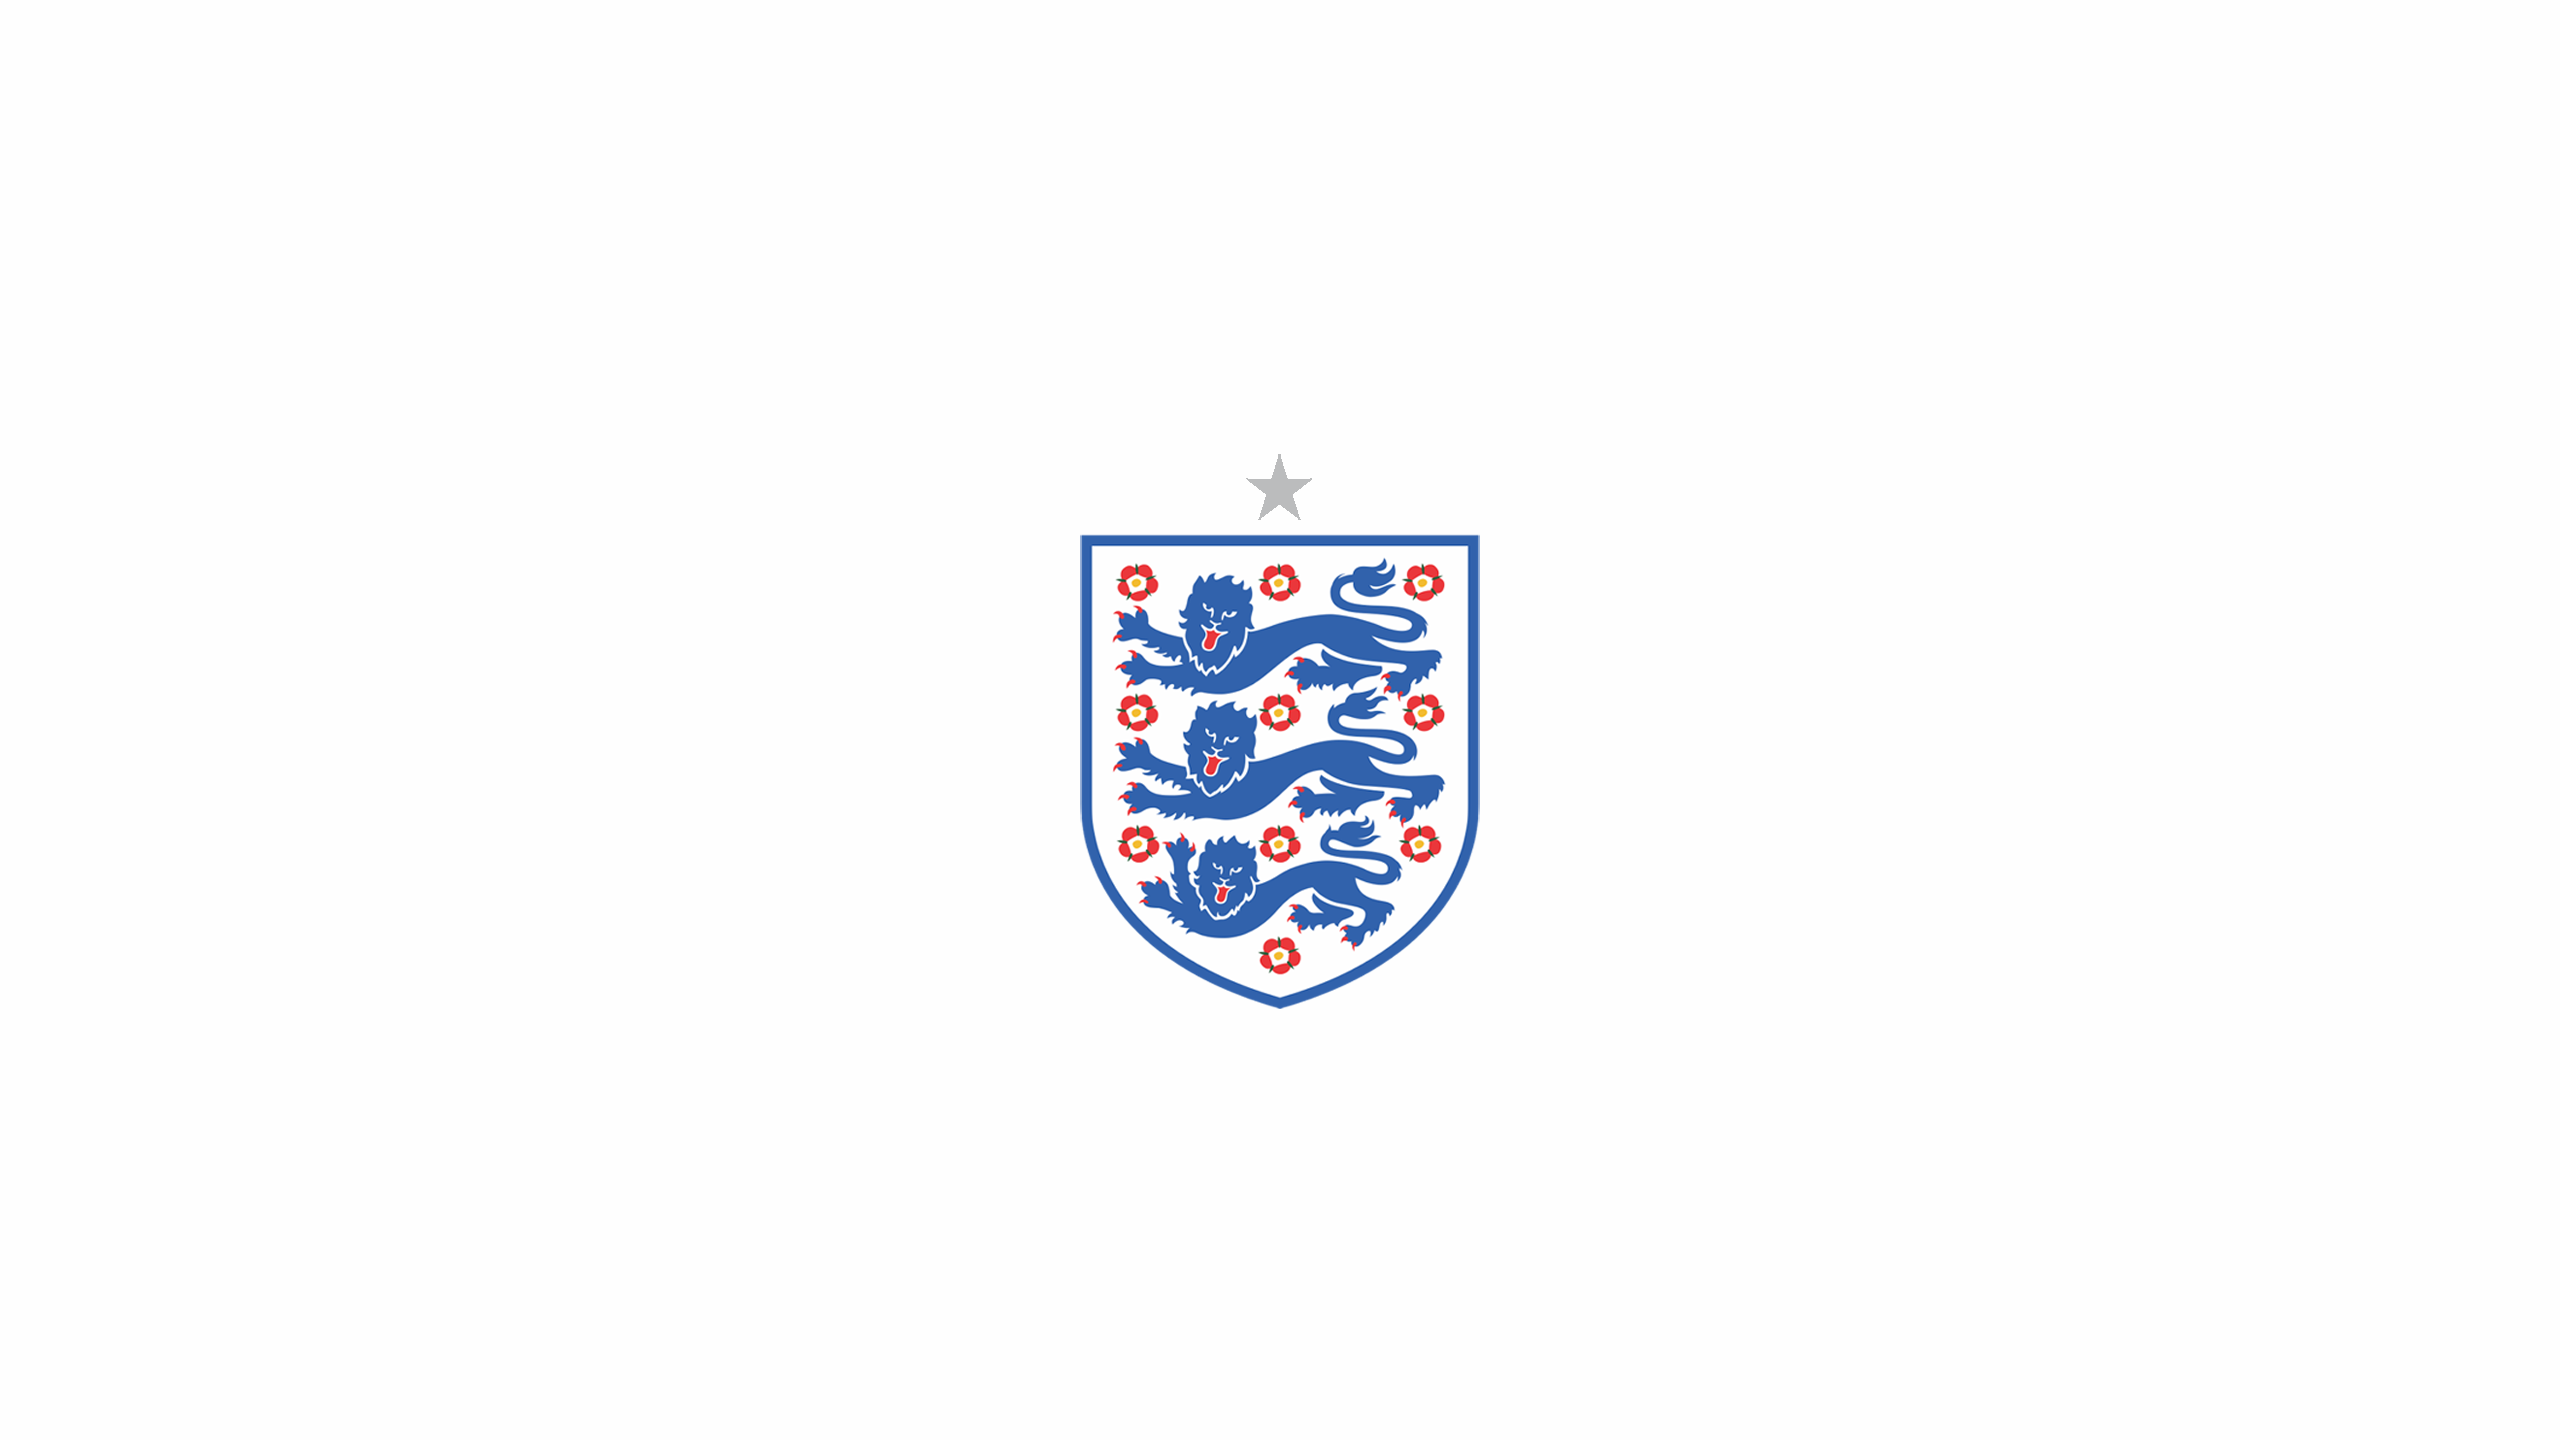 england football logo wallpaper